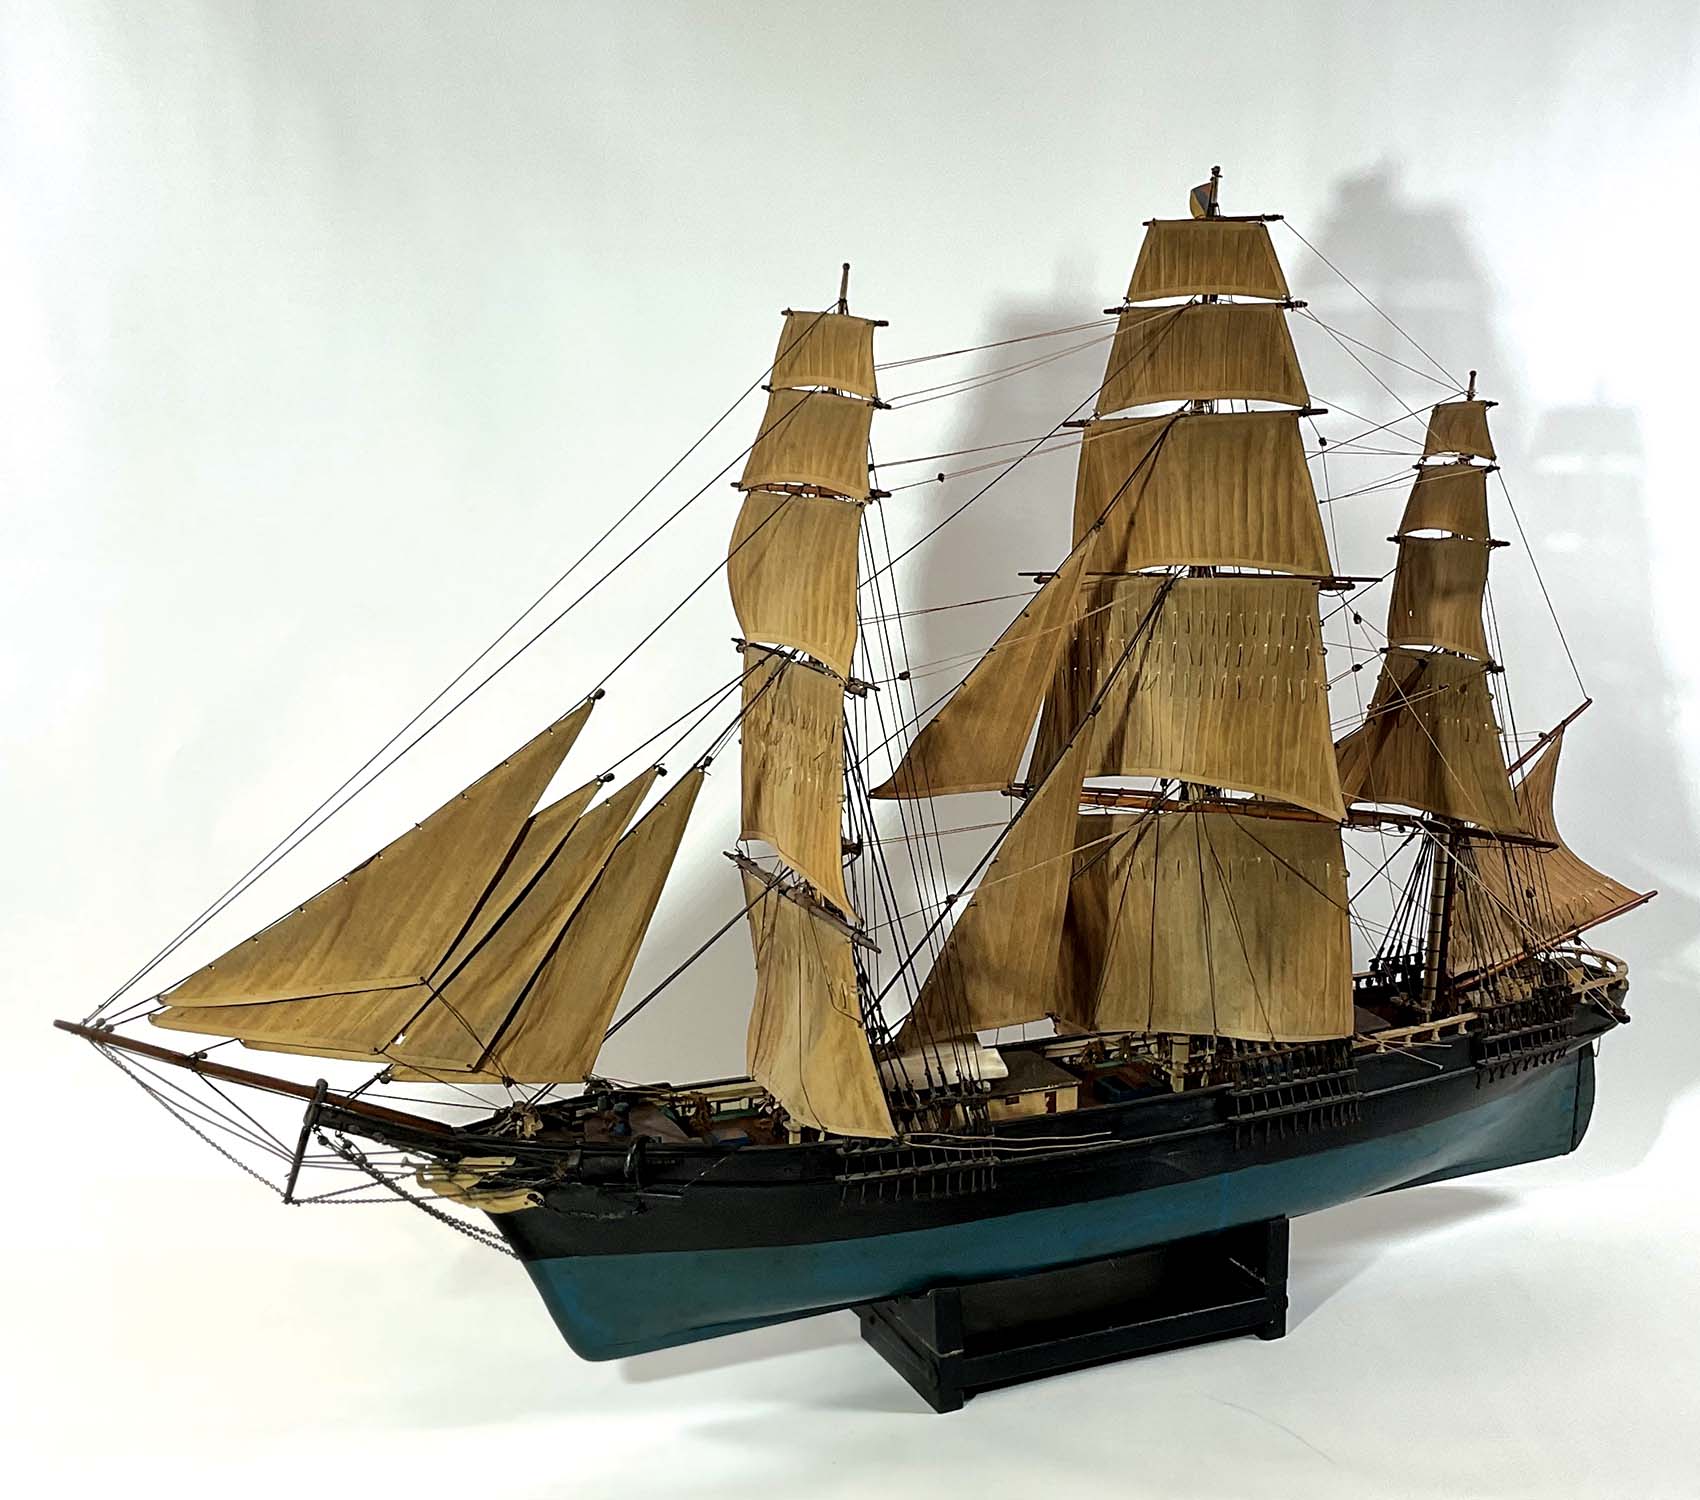 Antique Ship Model "Flying Cloud" - Lannan Gallery